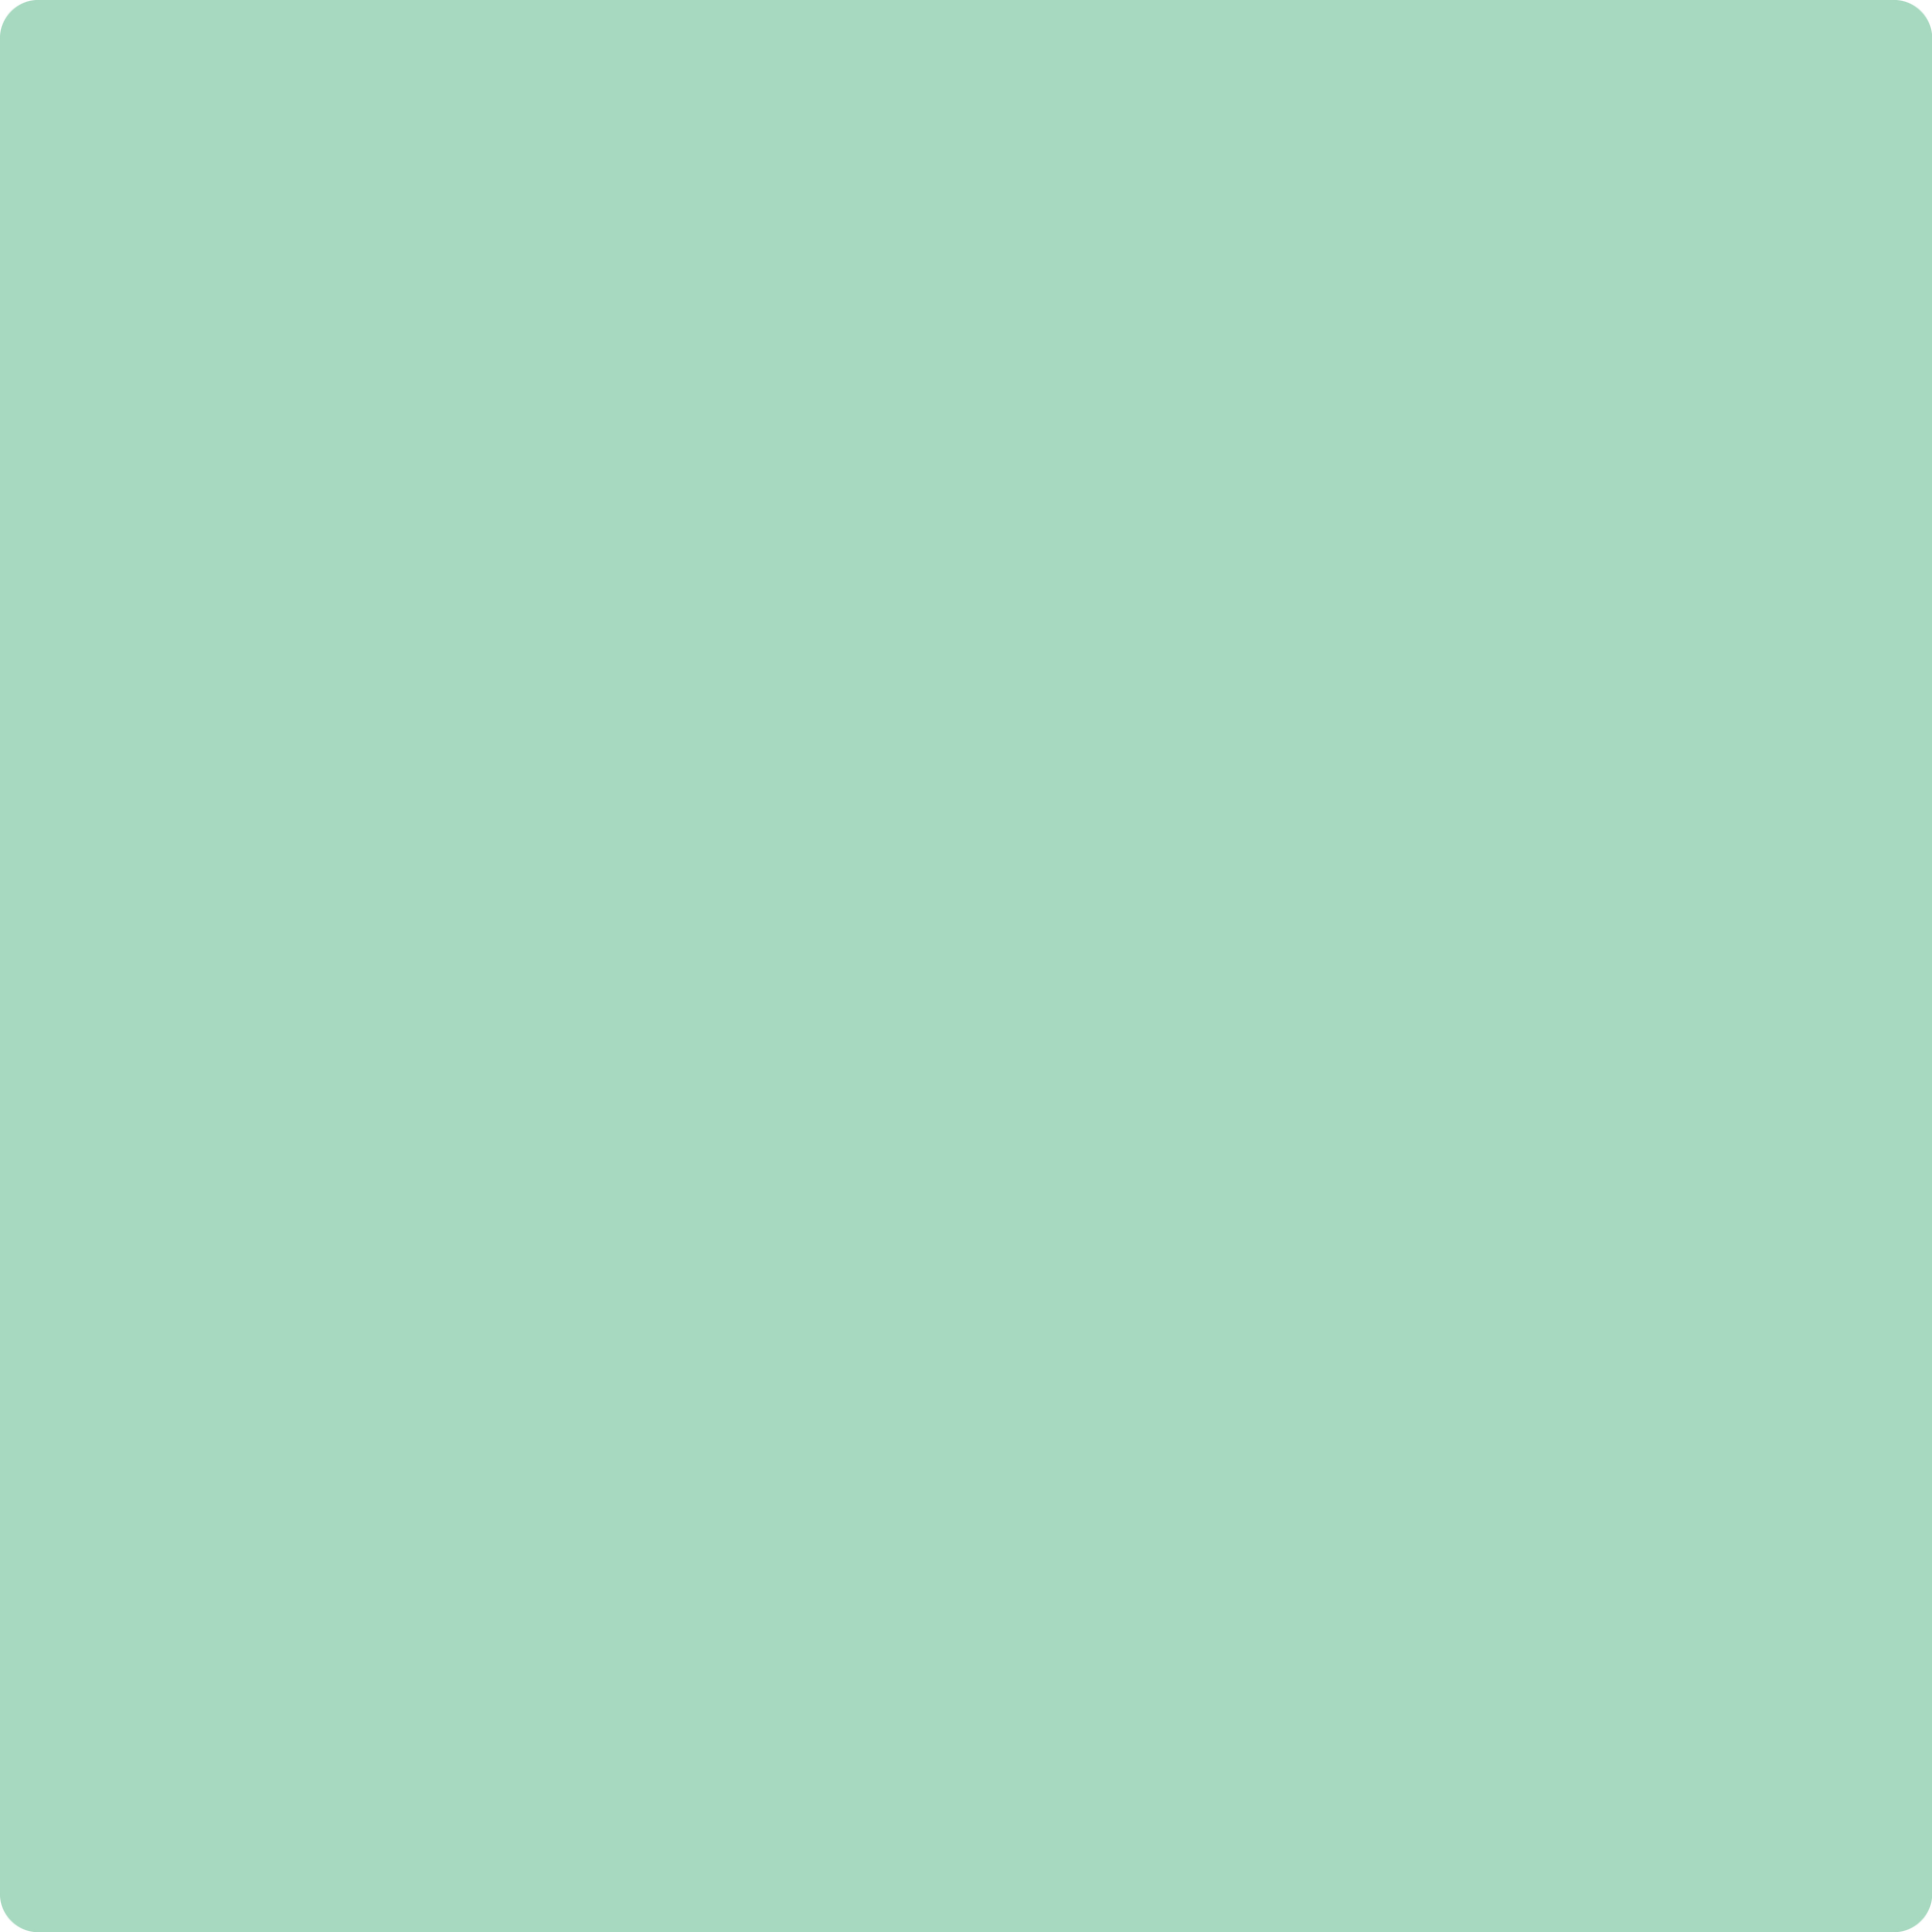 Popular Mint Green Paint Colors | Aboff's